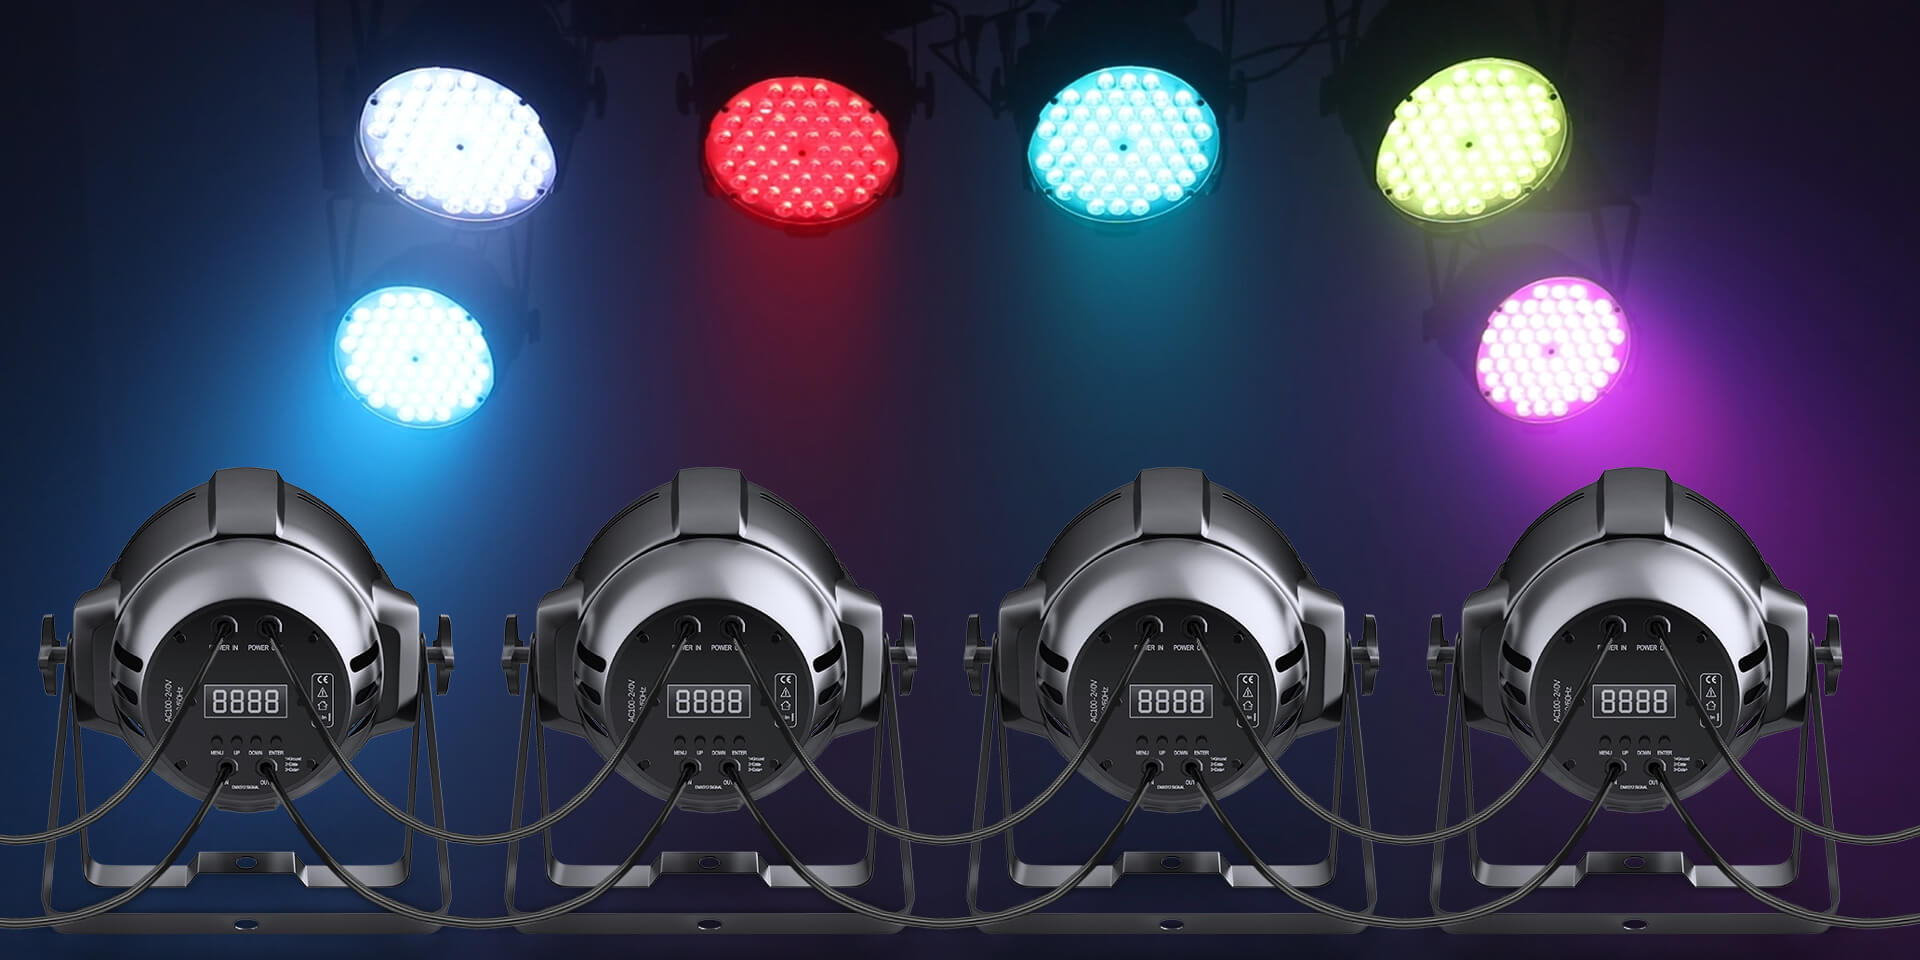 Betopper 54x3W RGB 3-IN-1 Full-Color LED Par Light LPC007-H